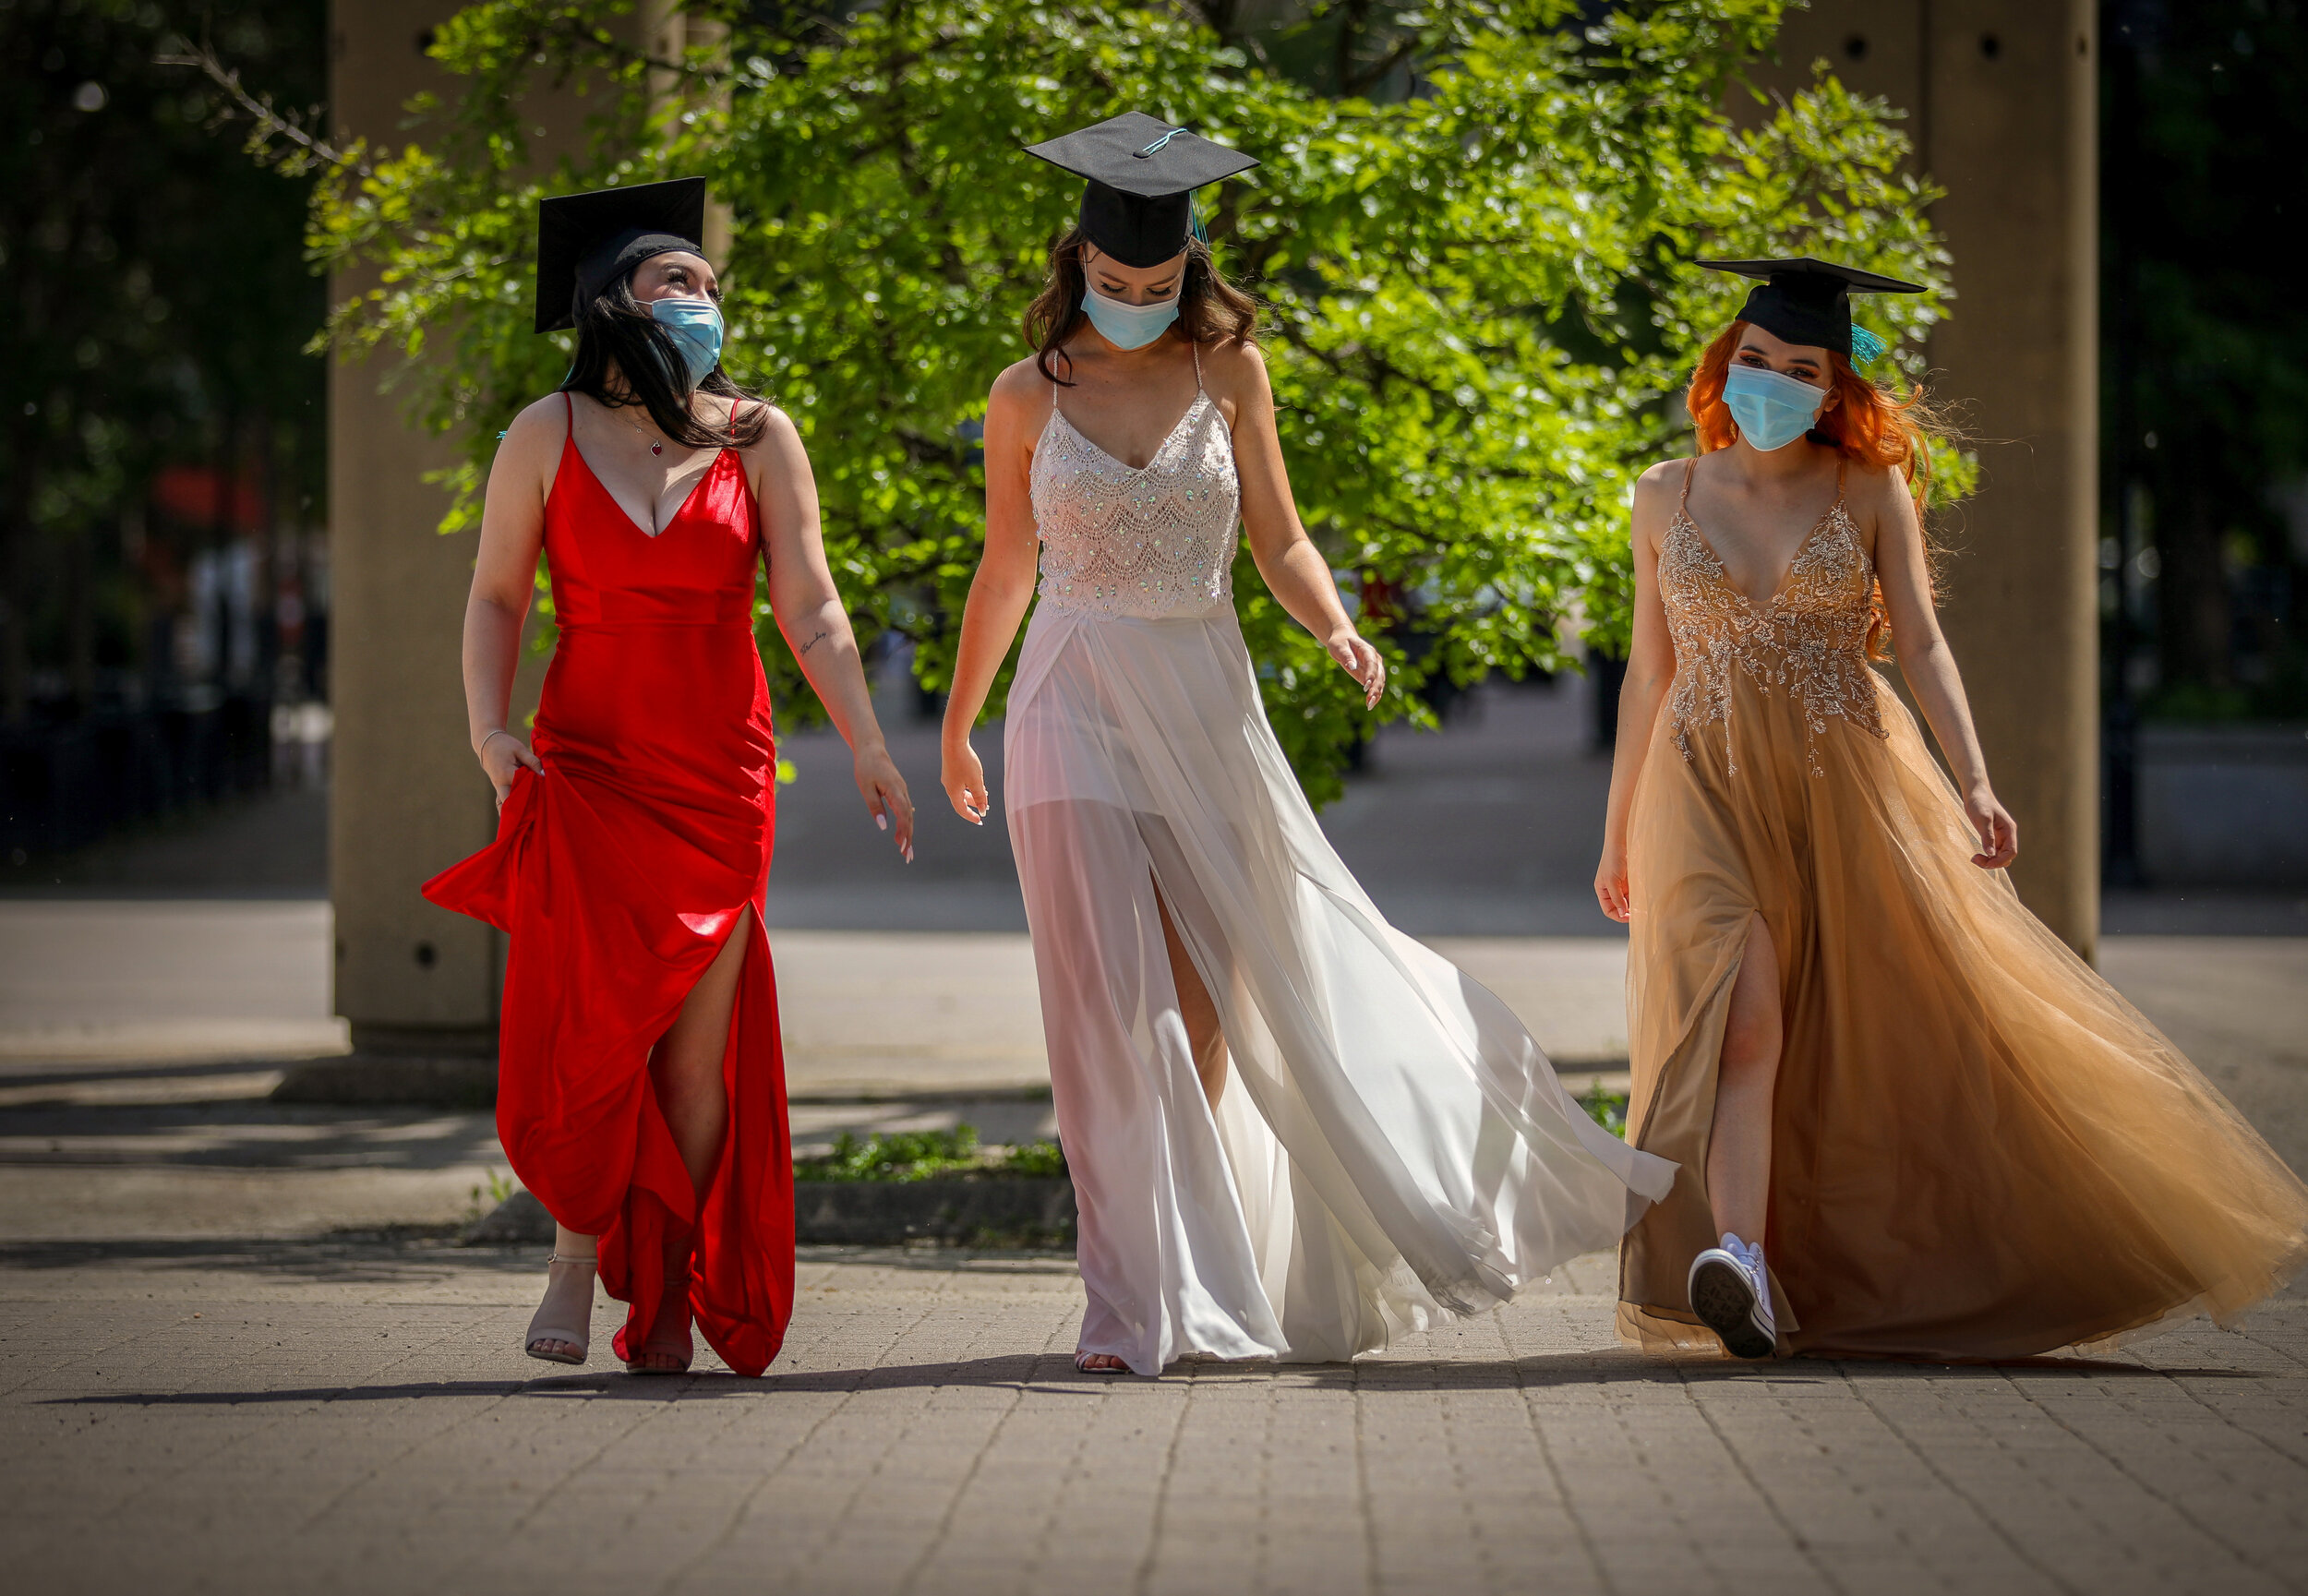  Lauren Desousa, Teresa Blach and Linda Flores, Grade 12 grads from Bishop McNally, take a walk in Calgary during a socially distanced photoshoot. 